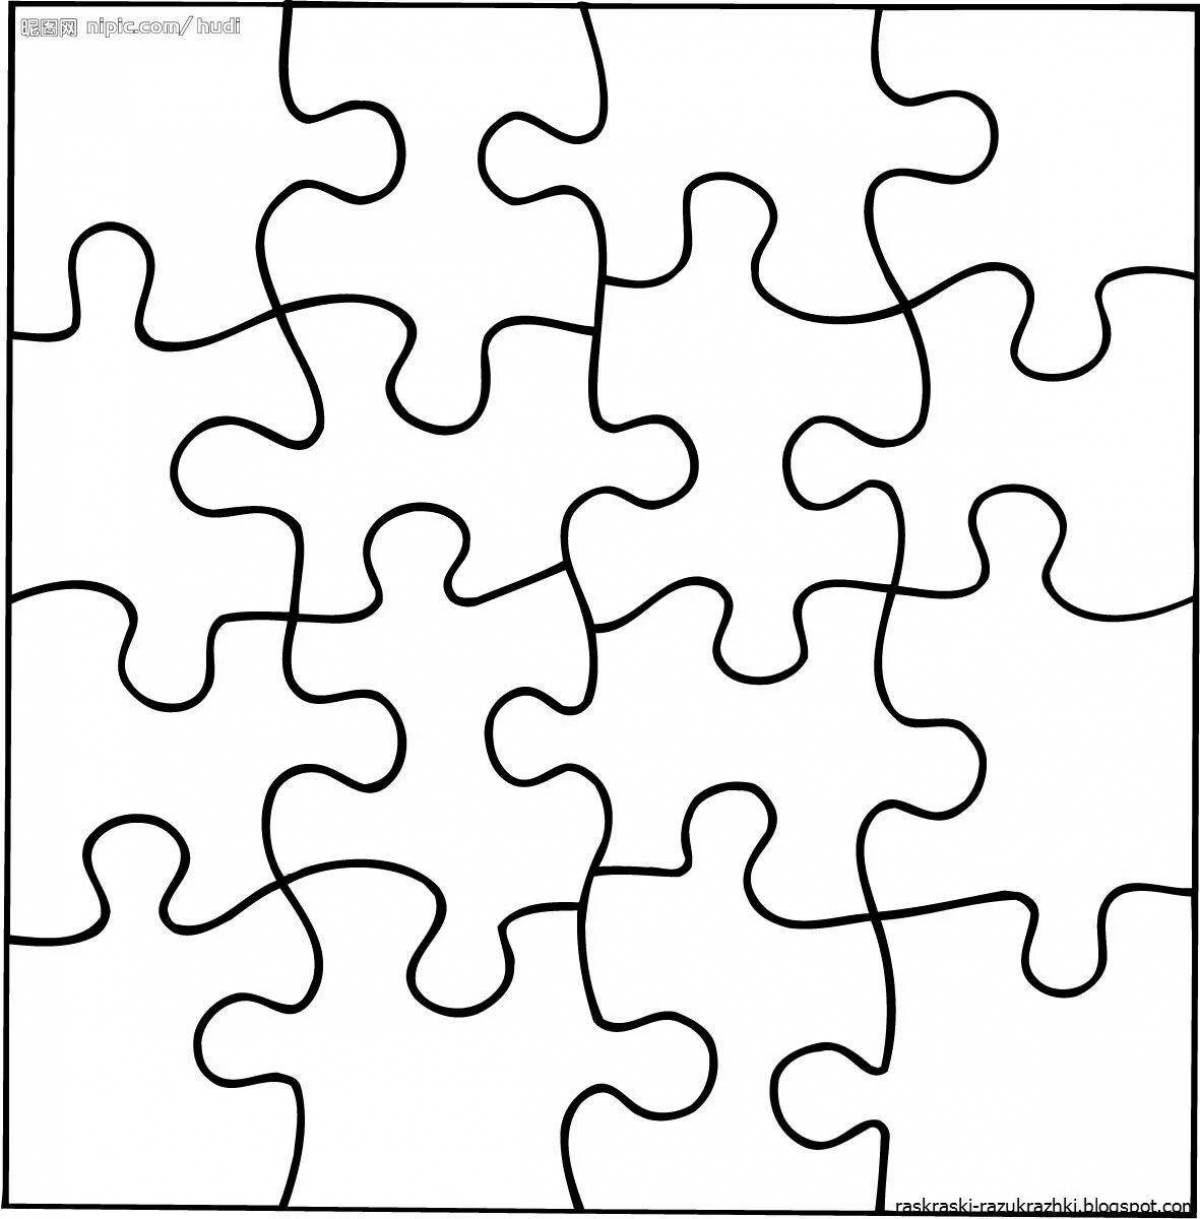 Complex coloring puzzles